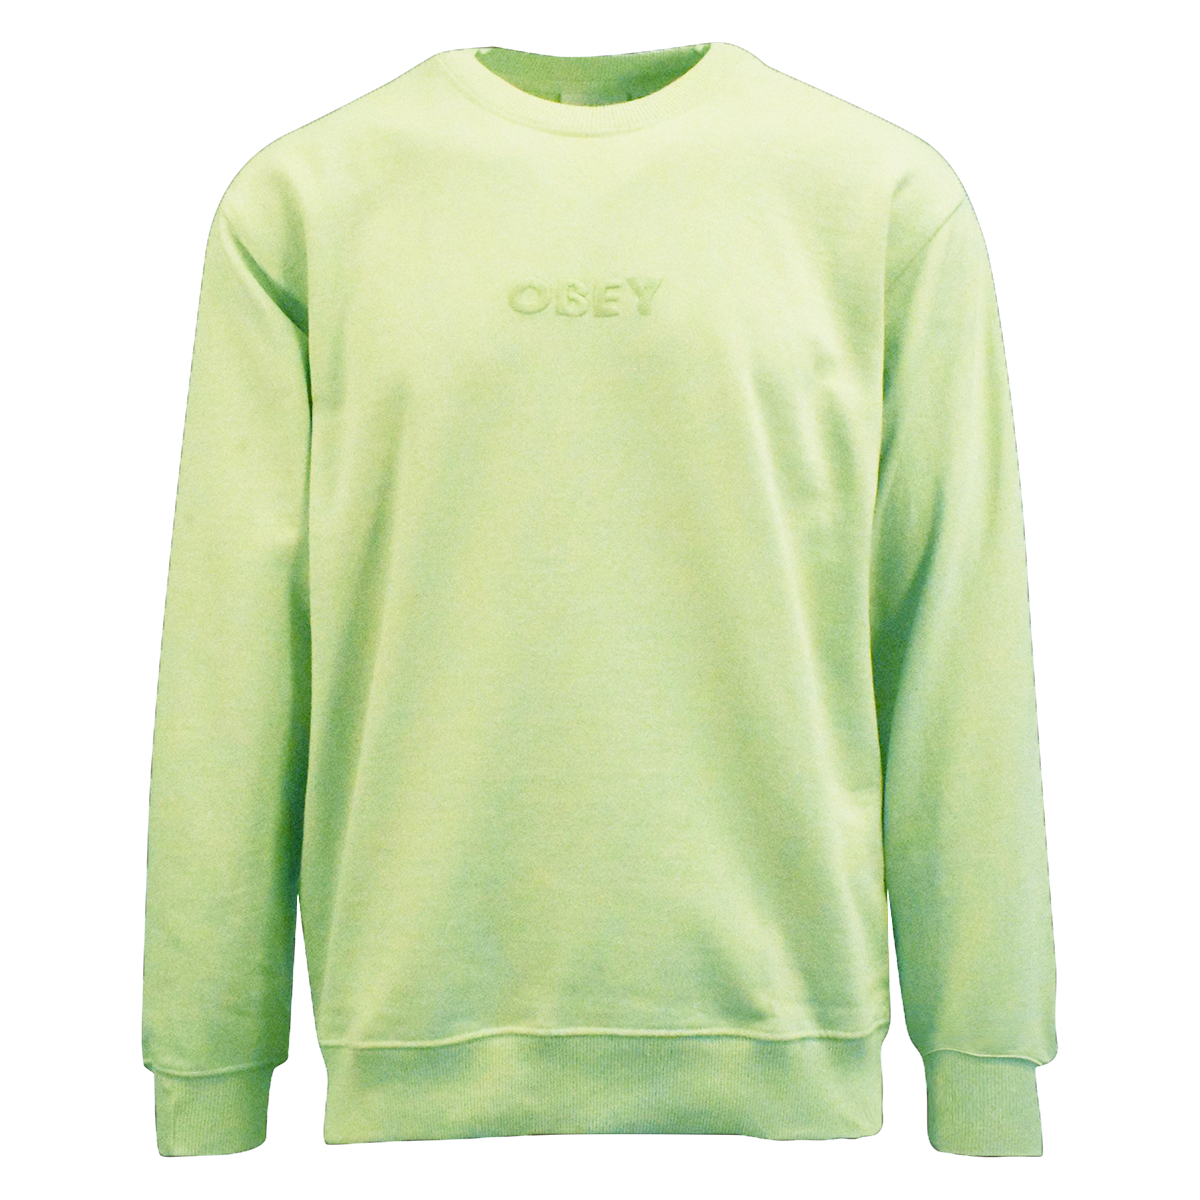 OBEY Men's Sweatshirt Cucumber Bold Ideals Crew Neck Long Sleeve (124)